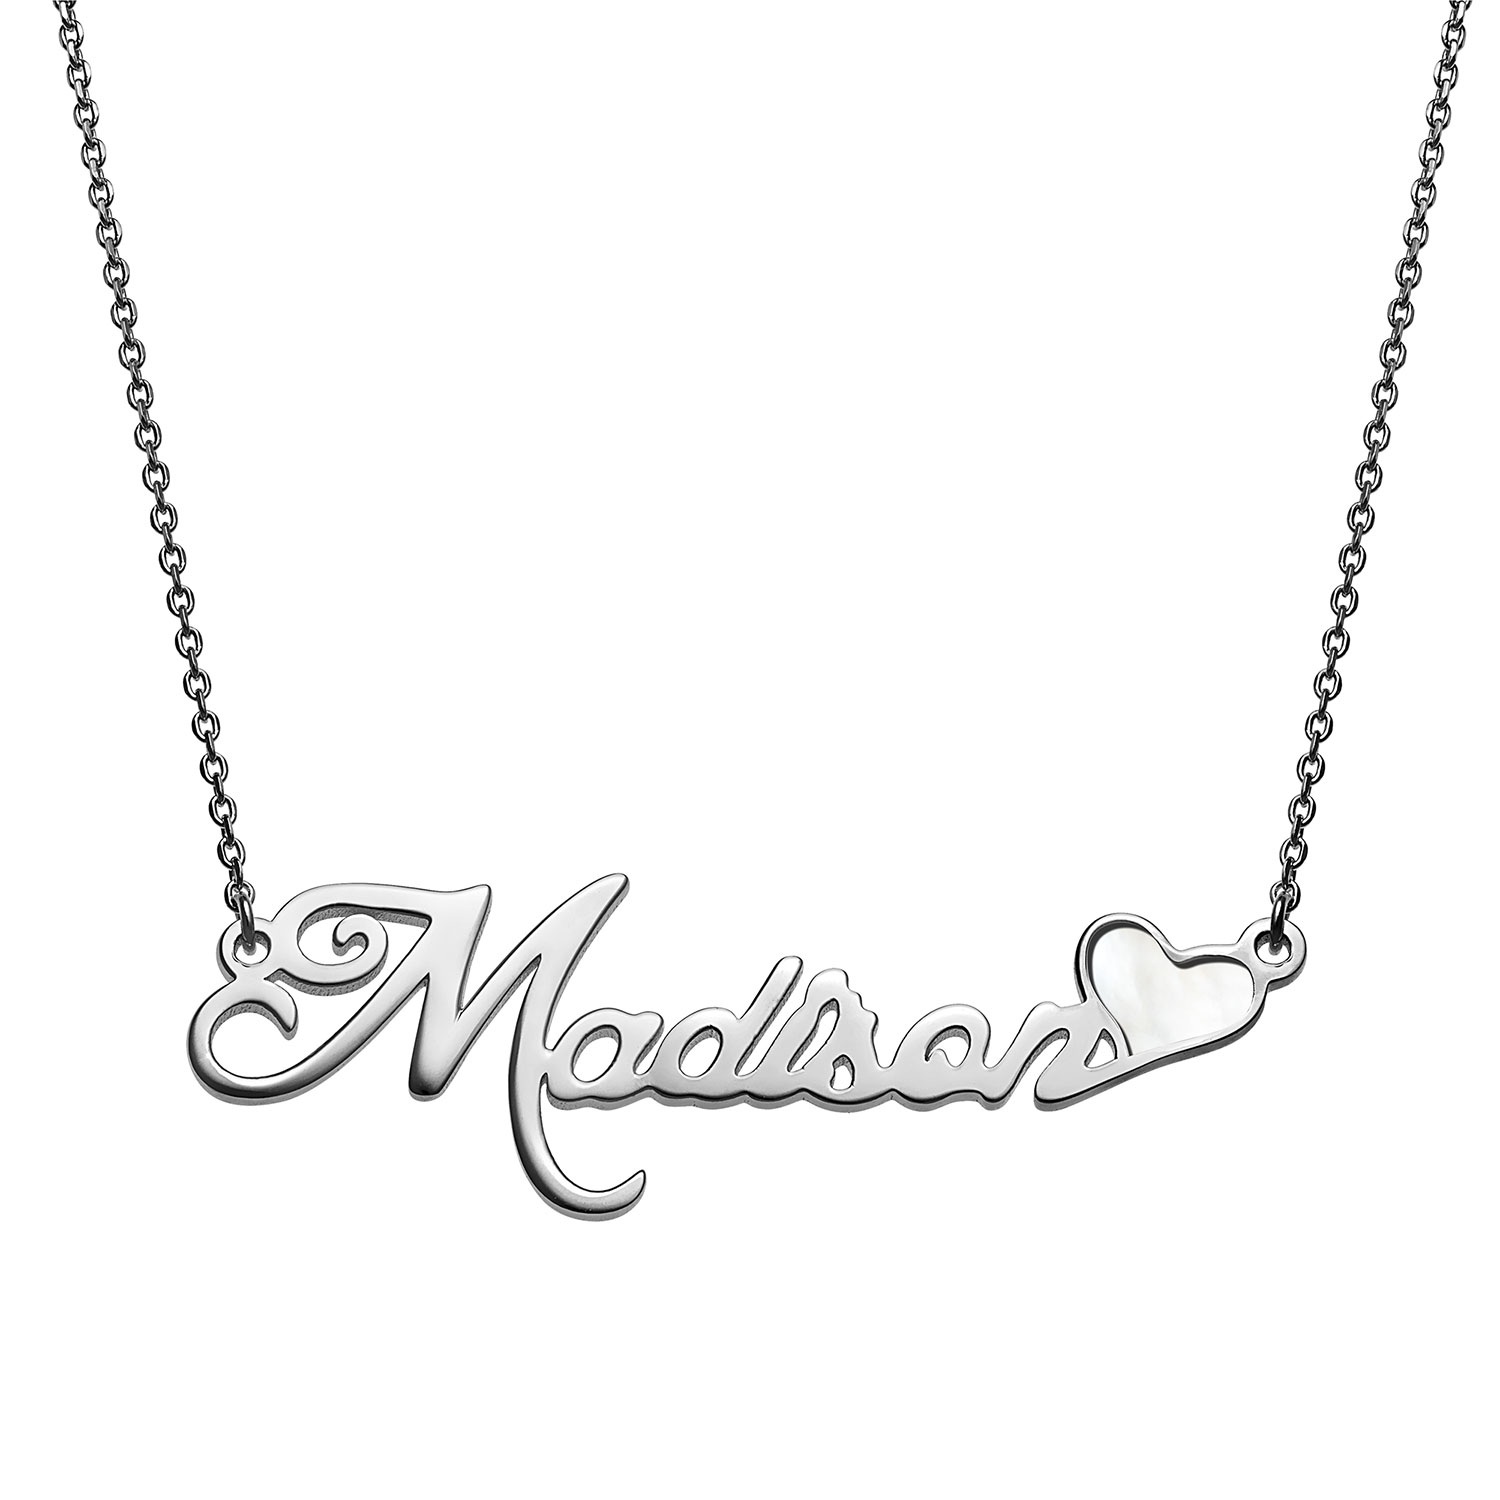 Script Name Plaque Necklace with White Enamel Heart